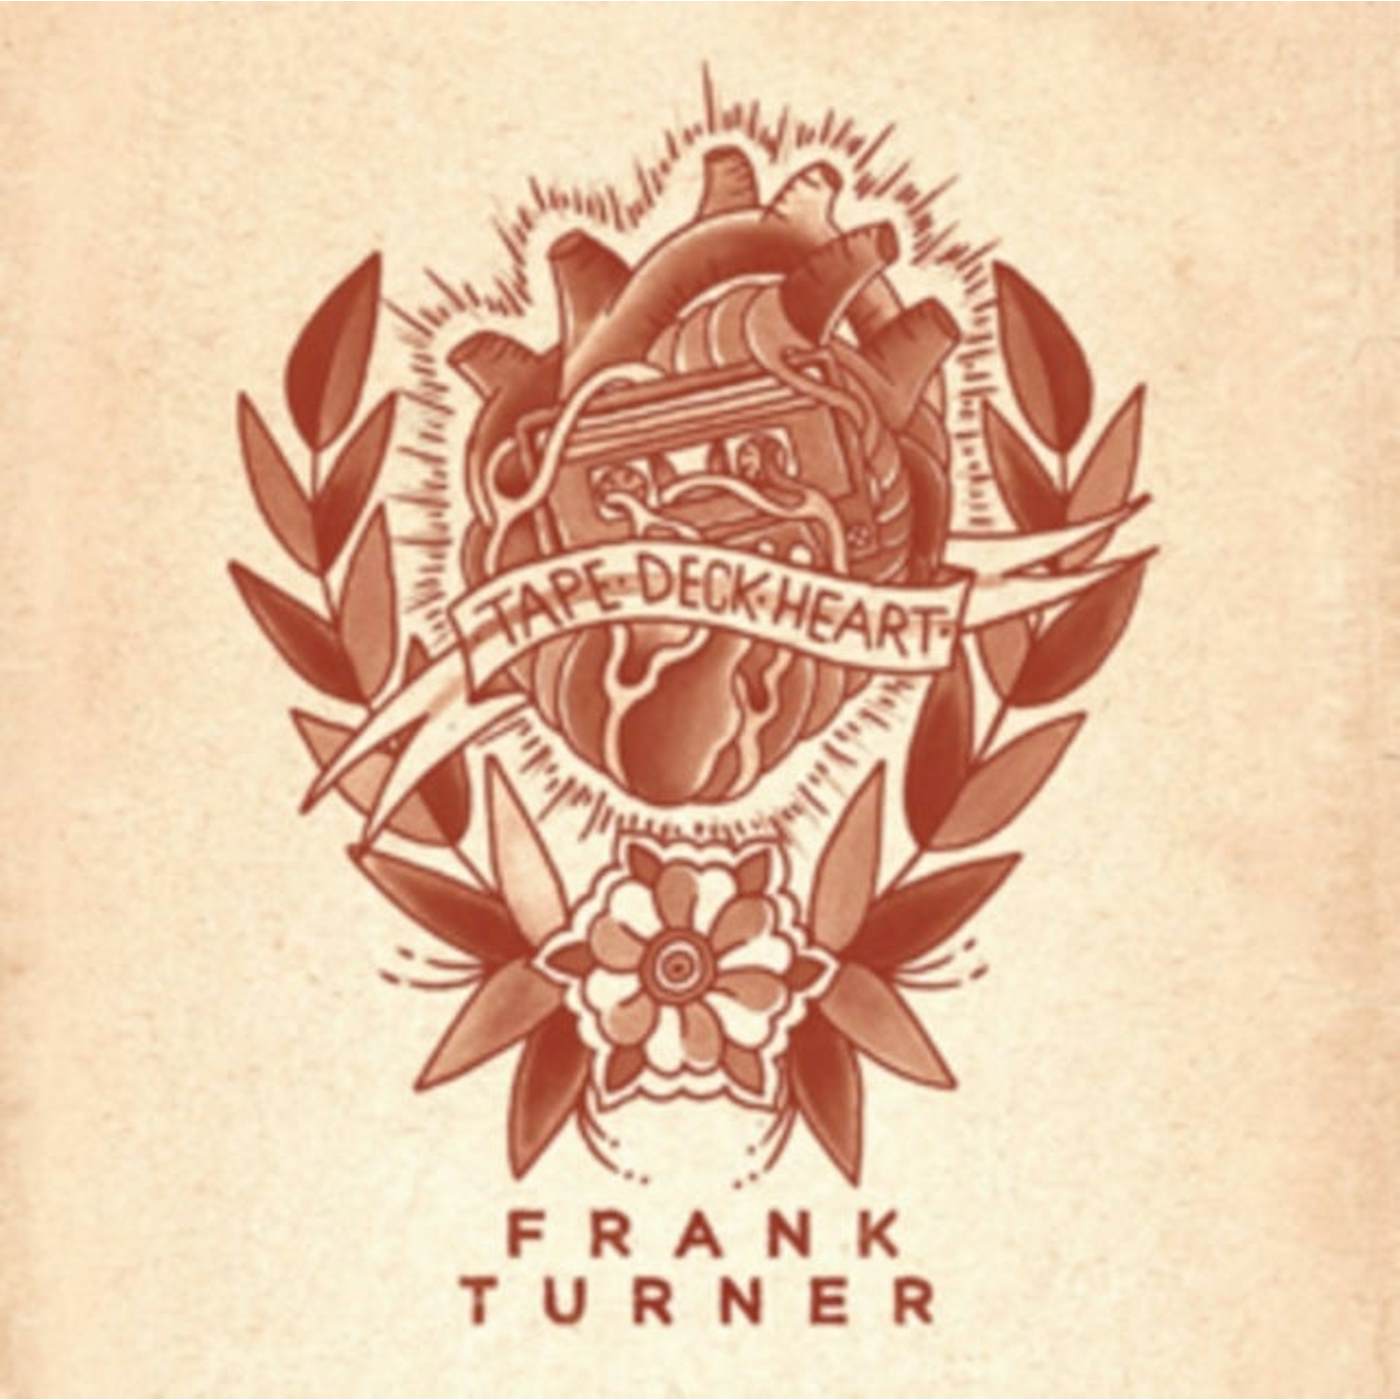 Frank Turner LP Vinyl Record - Tape Deck Heart